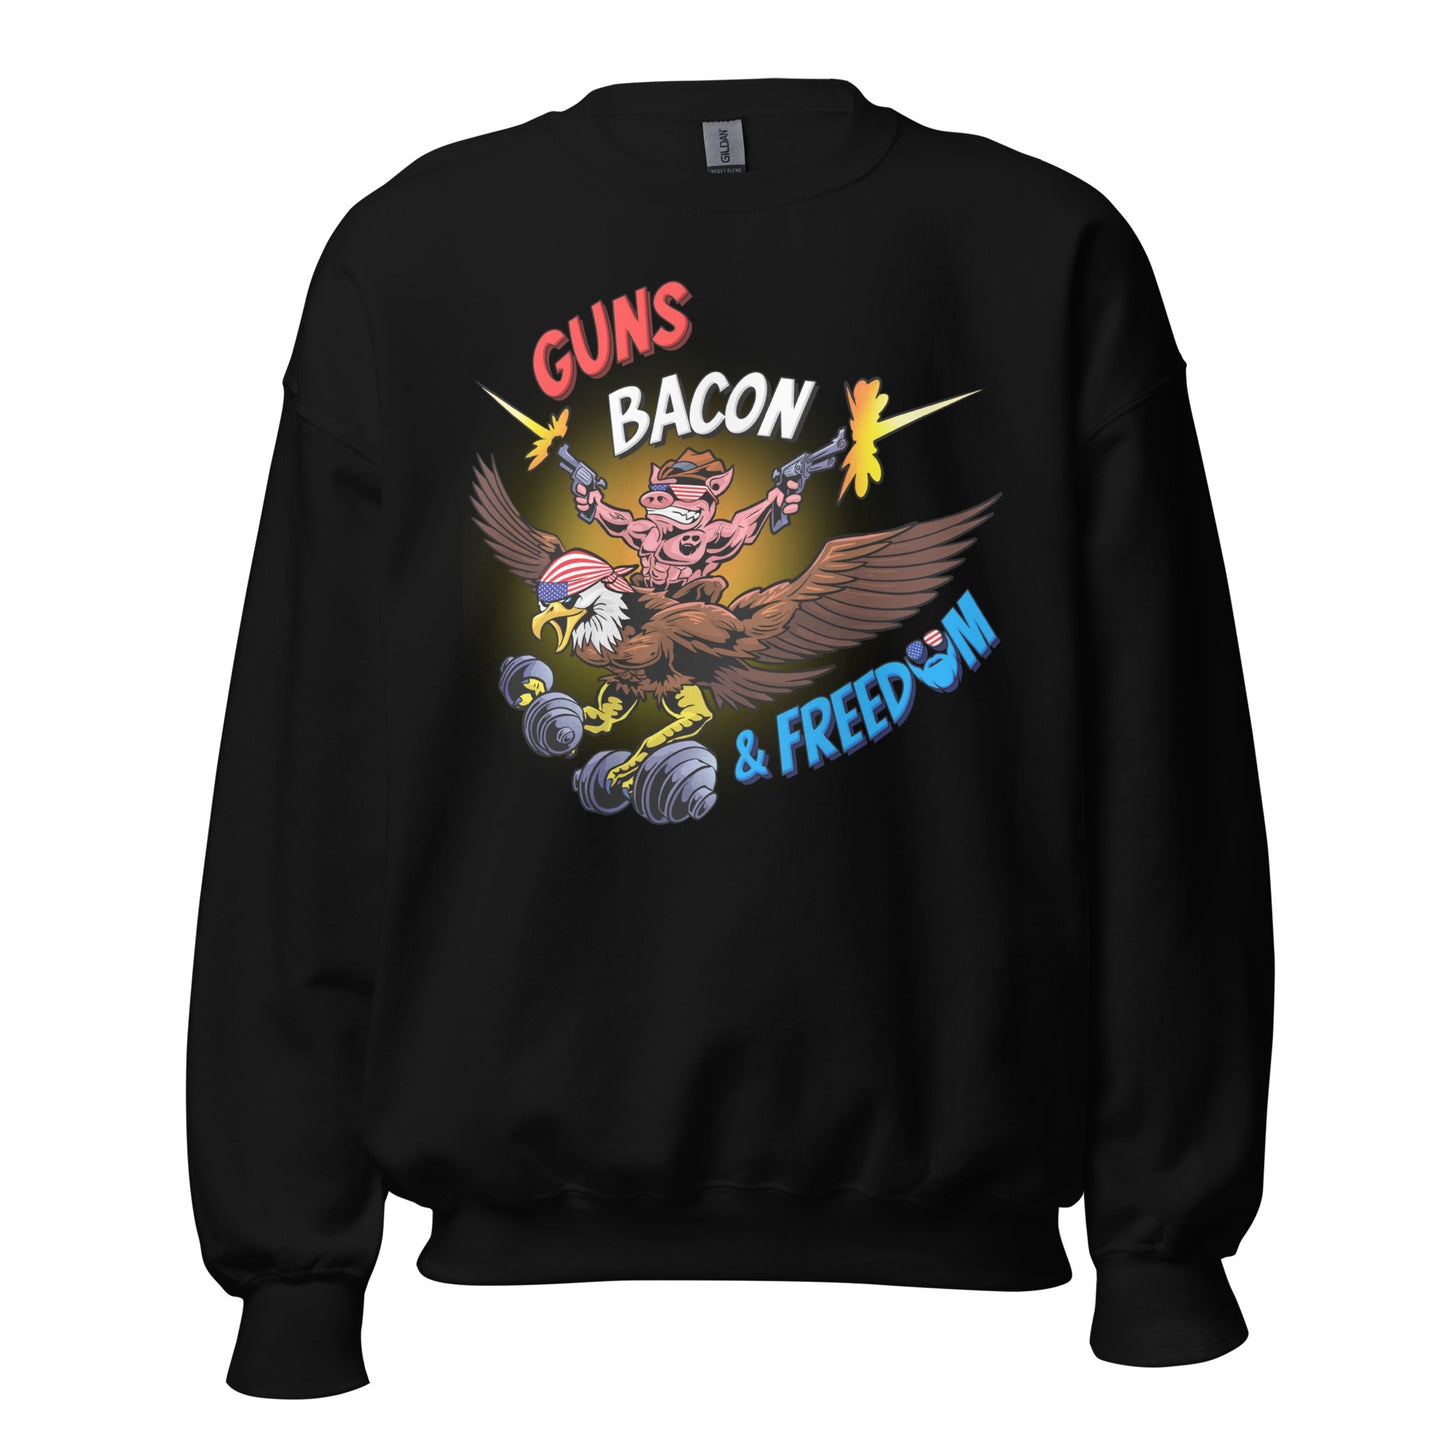 Guns, Bacon & Freedom (Image) Sweatshirt